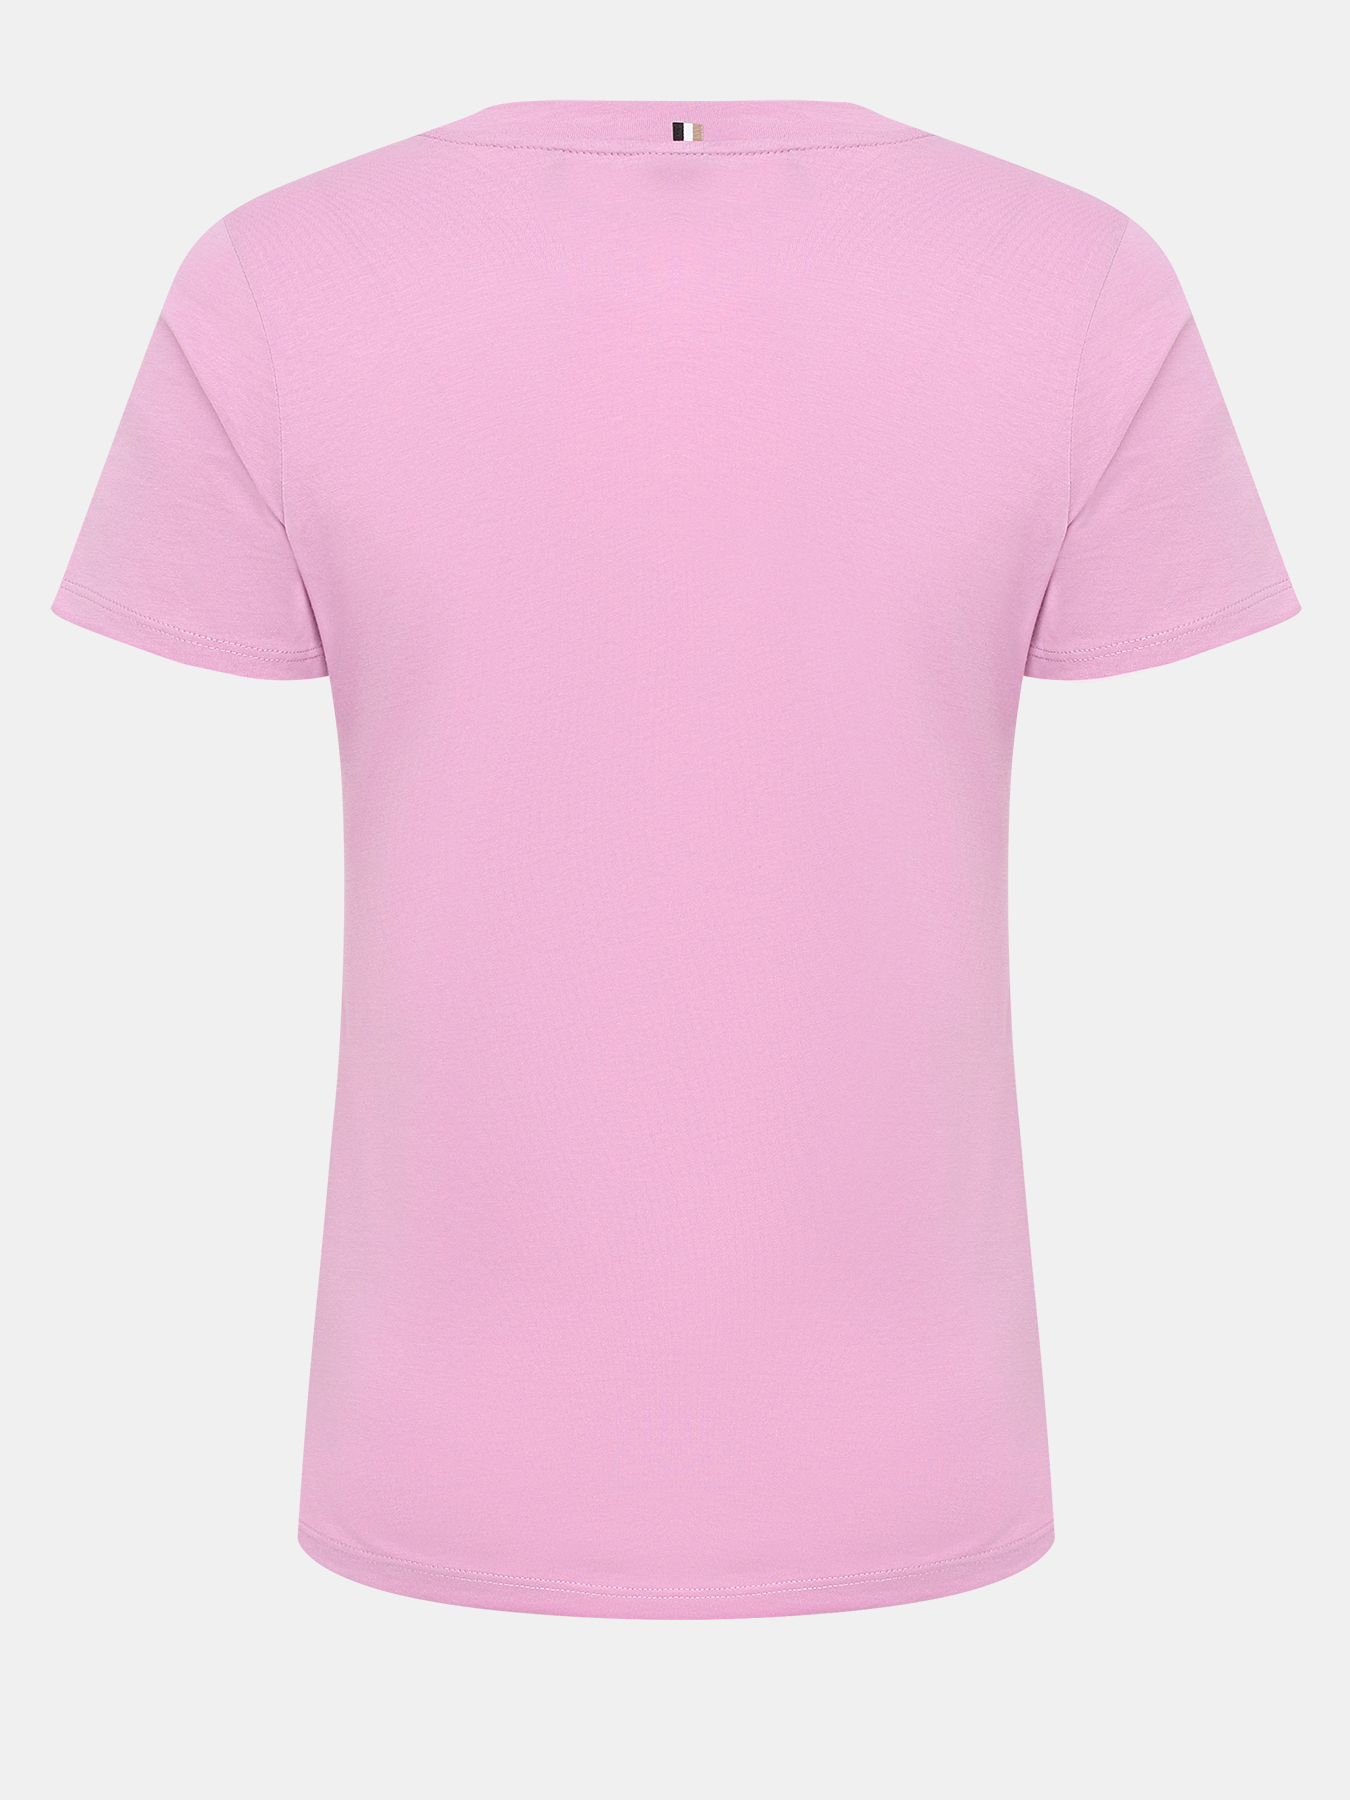 Футболка Elogo BOSS 434077-043, цвет розовый, размер 44-46 - фото 2